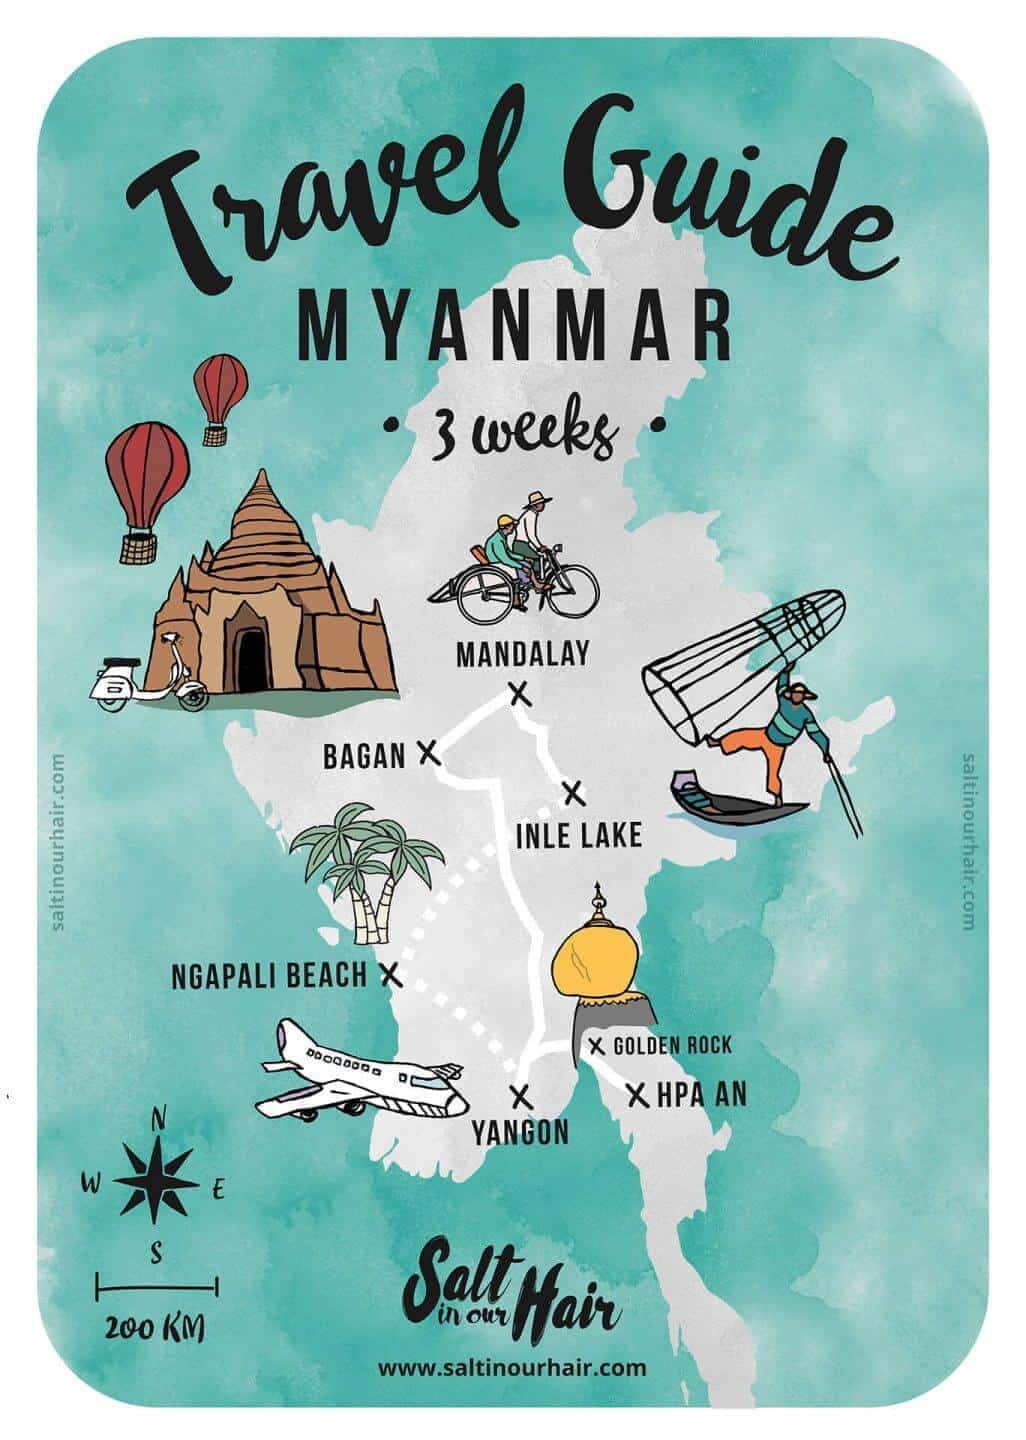 myanmar road trip